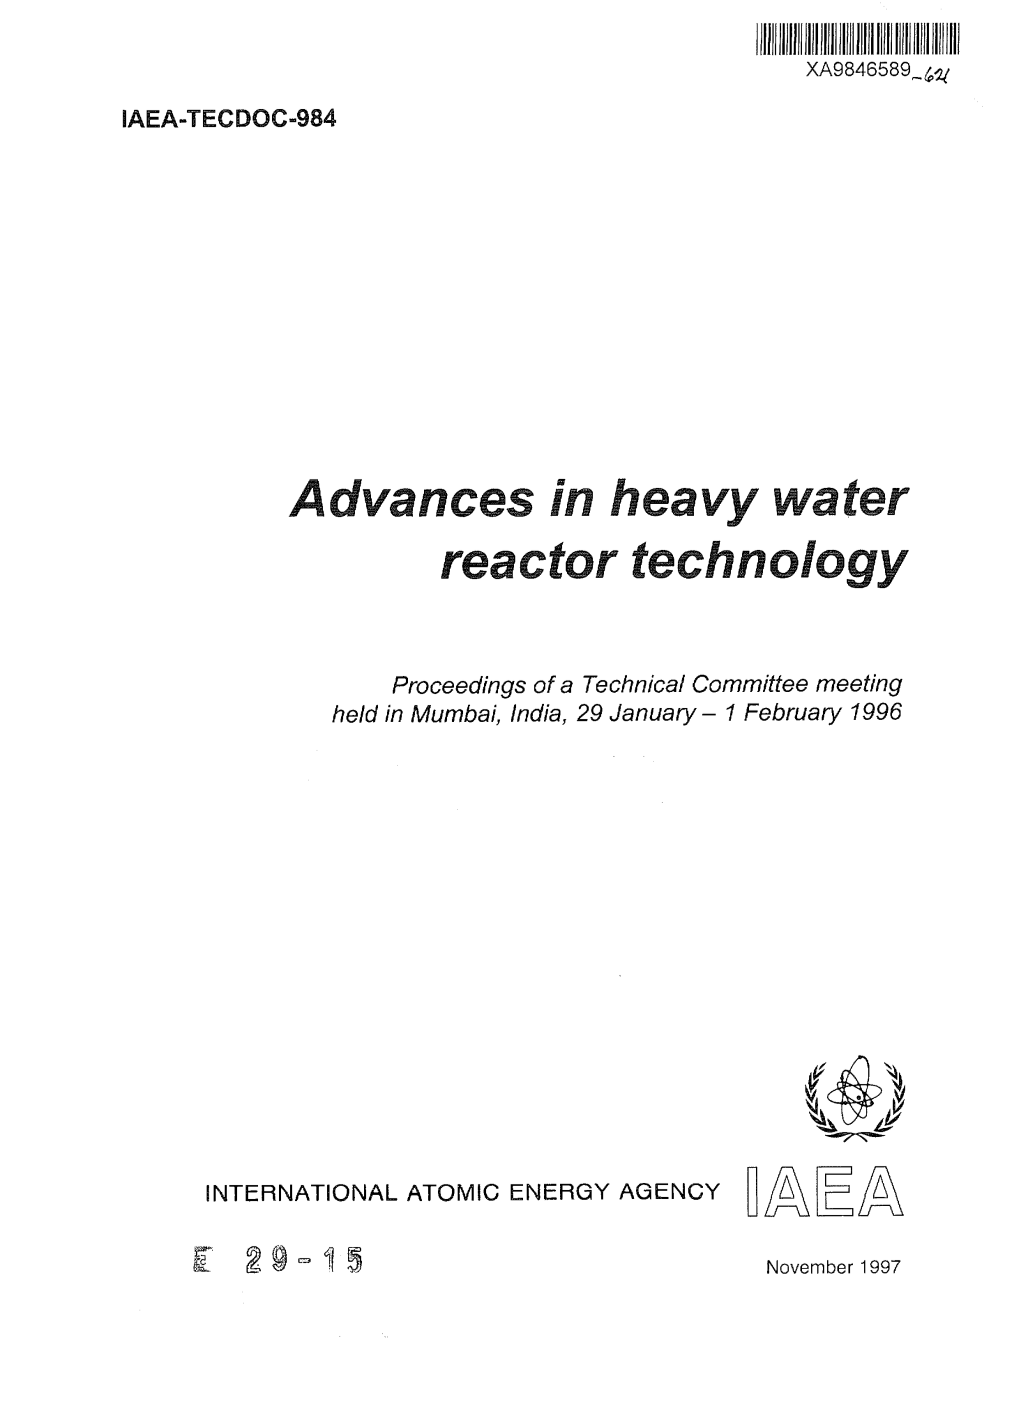 Advances in Heavy Water Reactor Technology